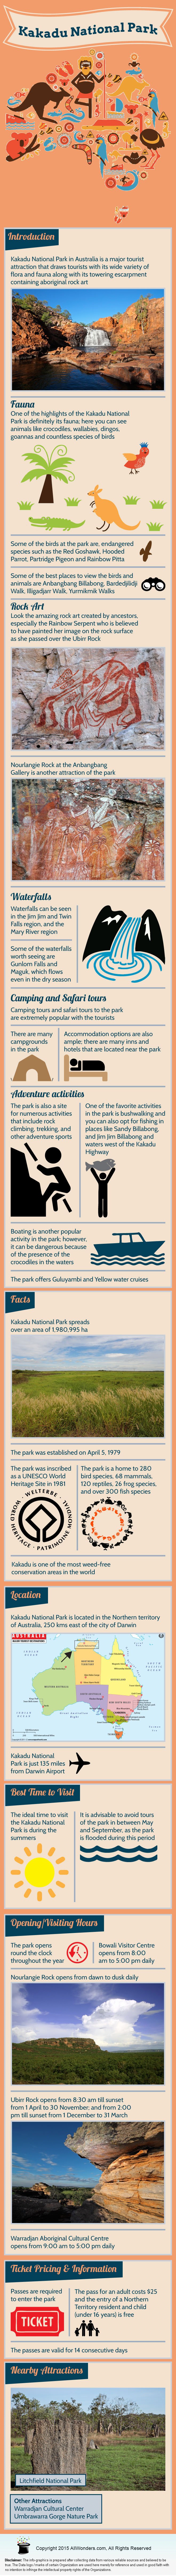 Kakadu National Park Infographic